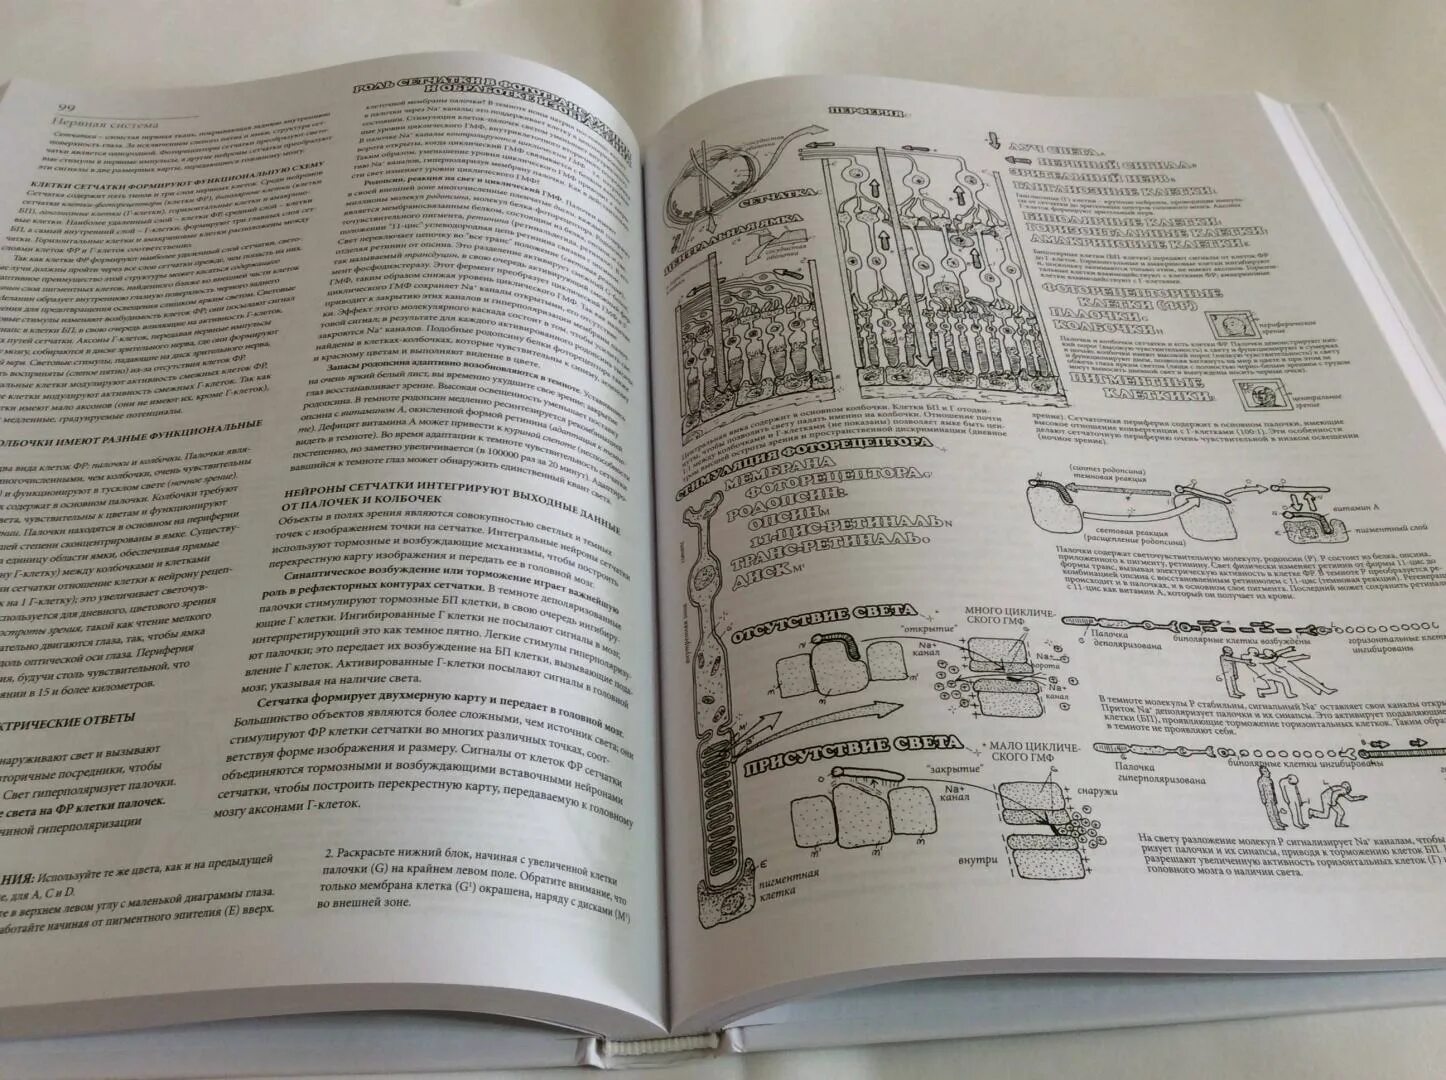 Physiology atlas #1